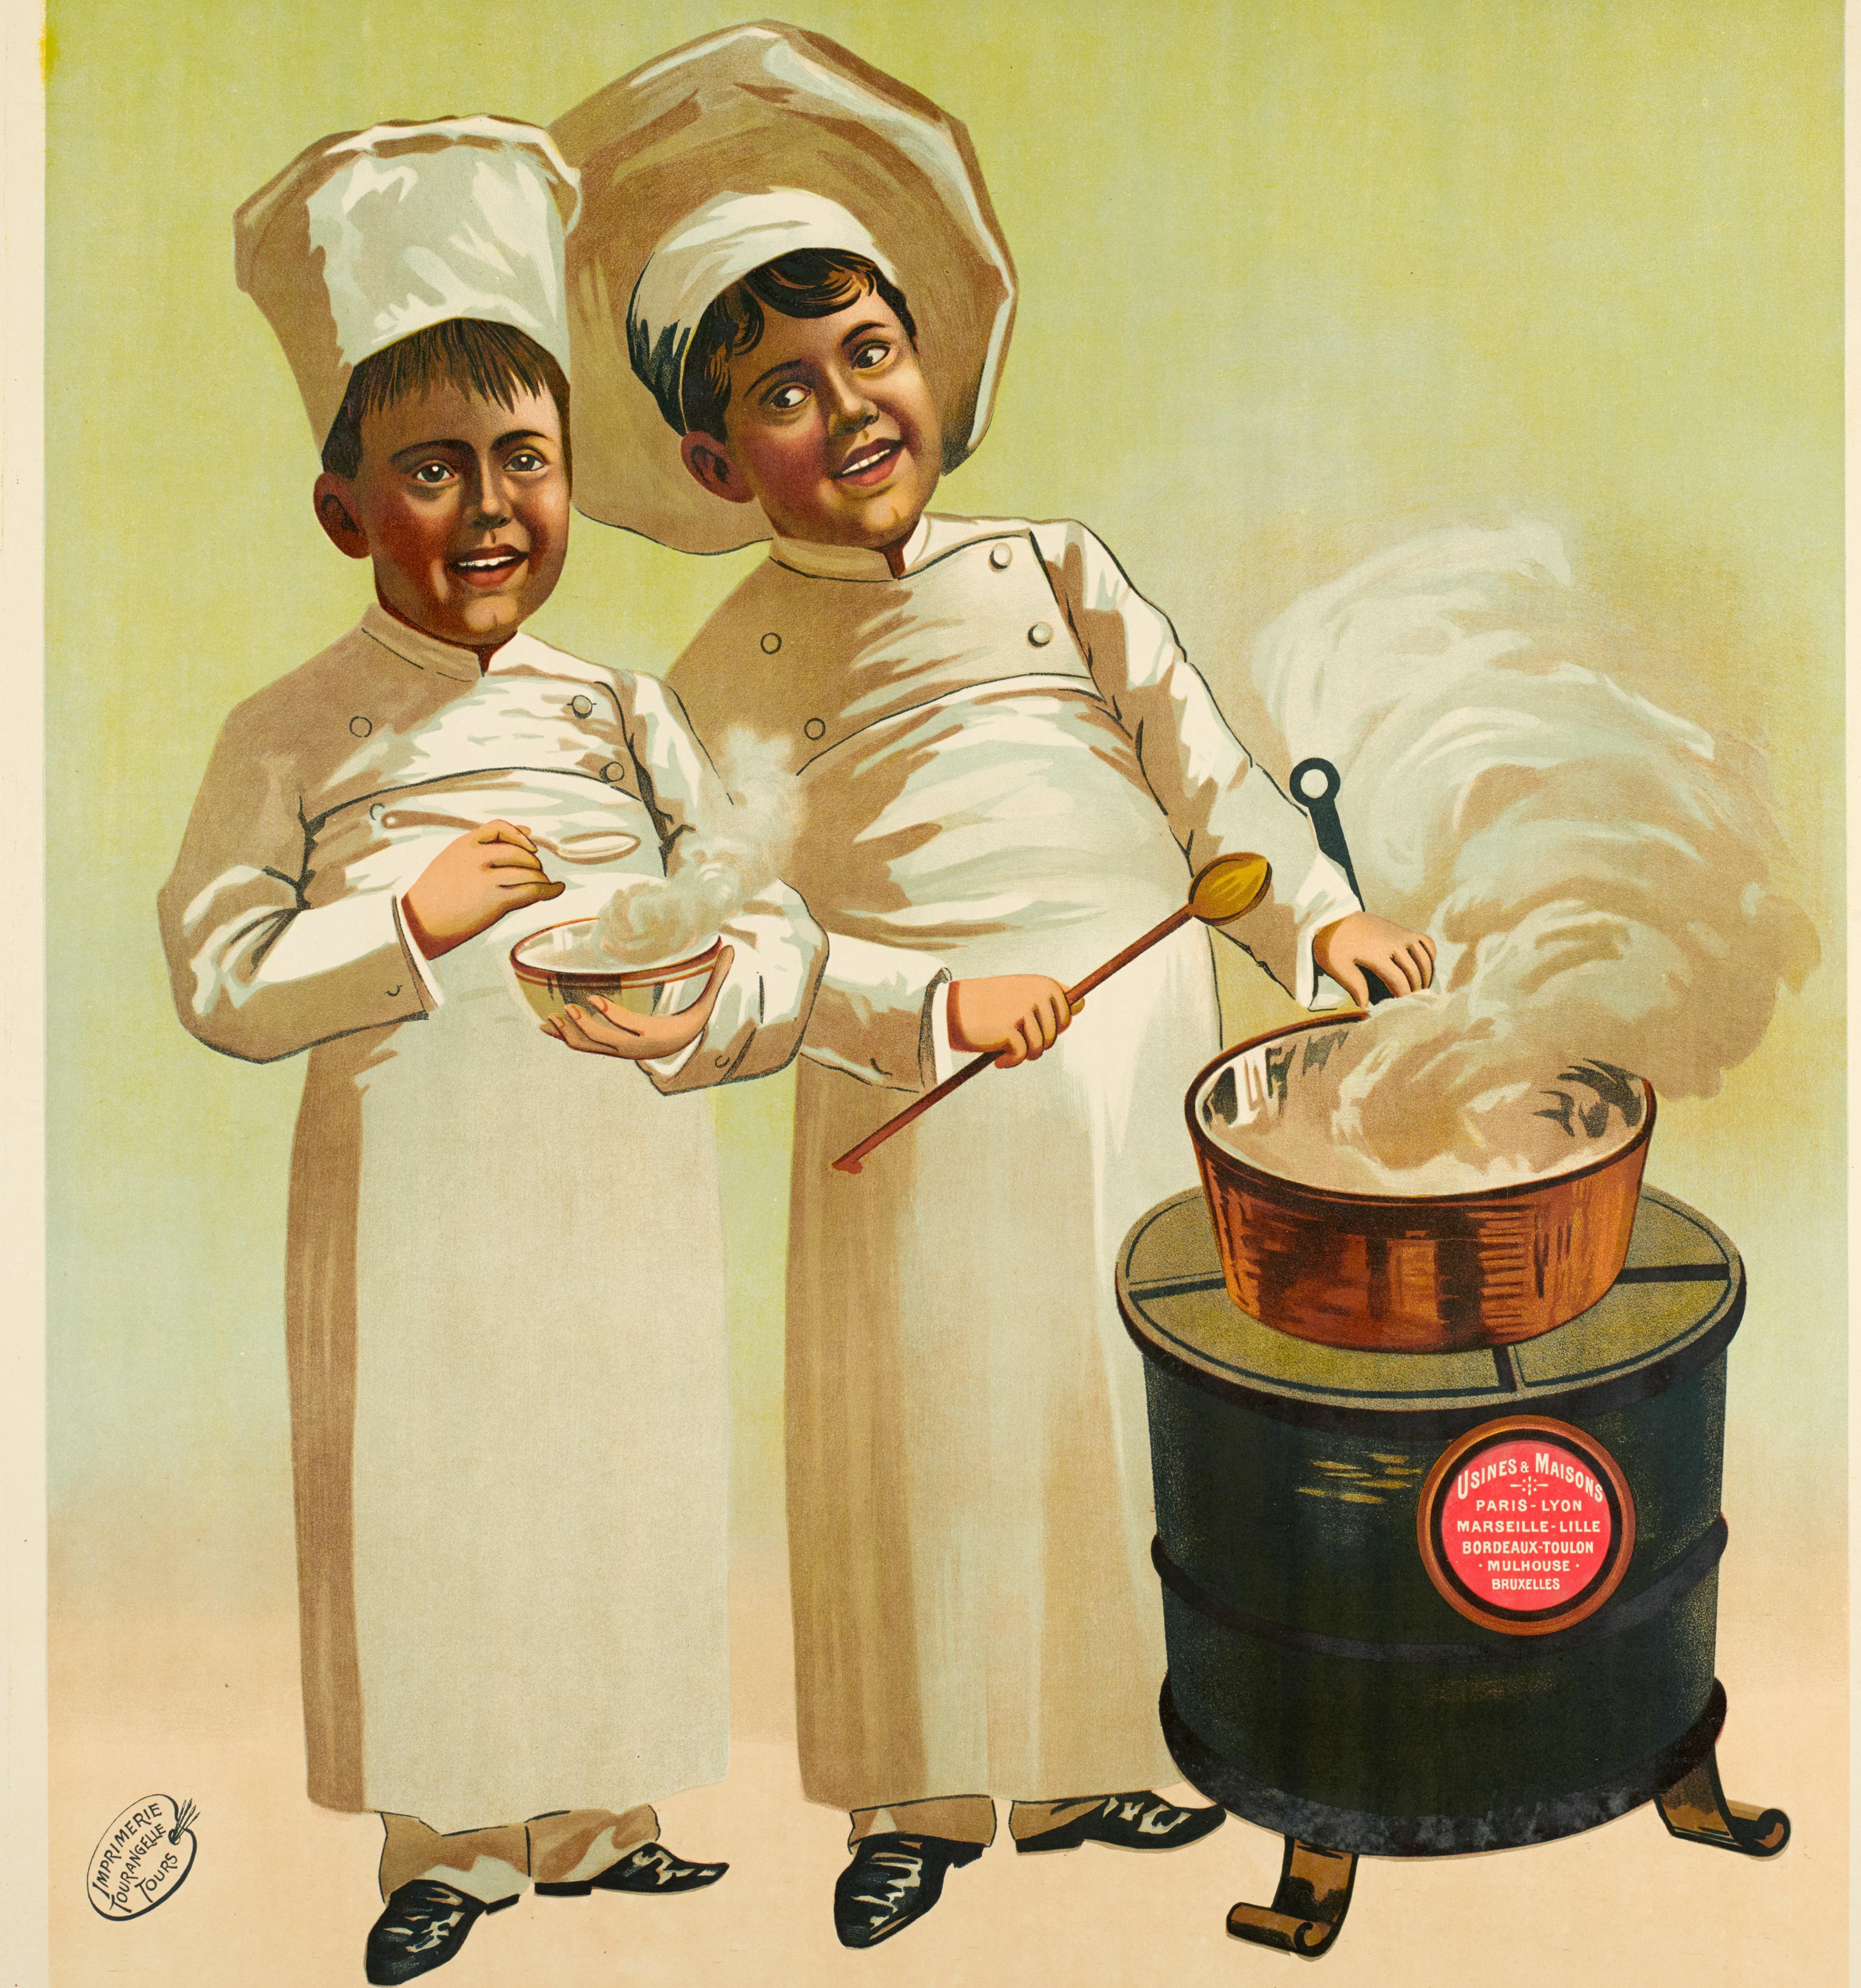 Original Art Nouveau Poster for Macaroni and Vermicelle Rivoire et Carret circa 1900.

Artist: Anonymous
Title: Macaroni – Vermicelle – Rivoire et Carret
Date: circa 1900
Size: 33.9 x 51.2 in / 86 x 130 cm
Printer: Imp. Tourangelle,